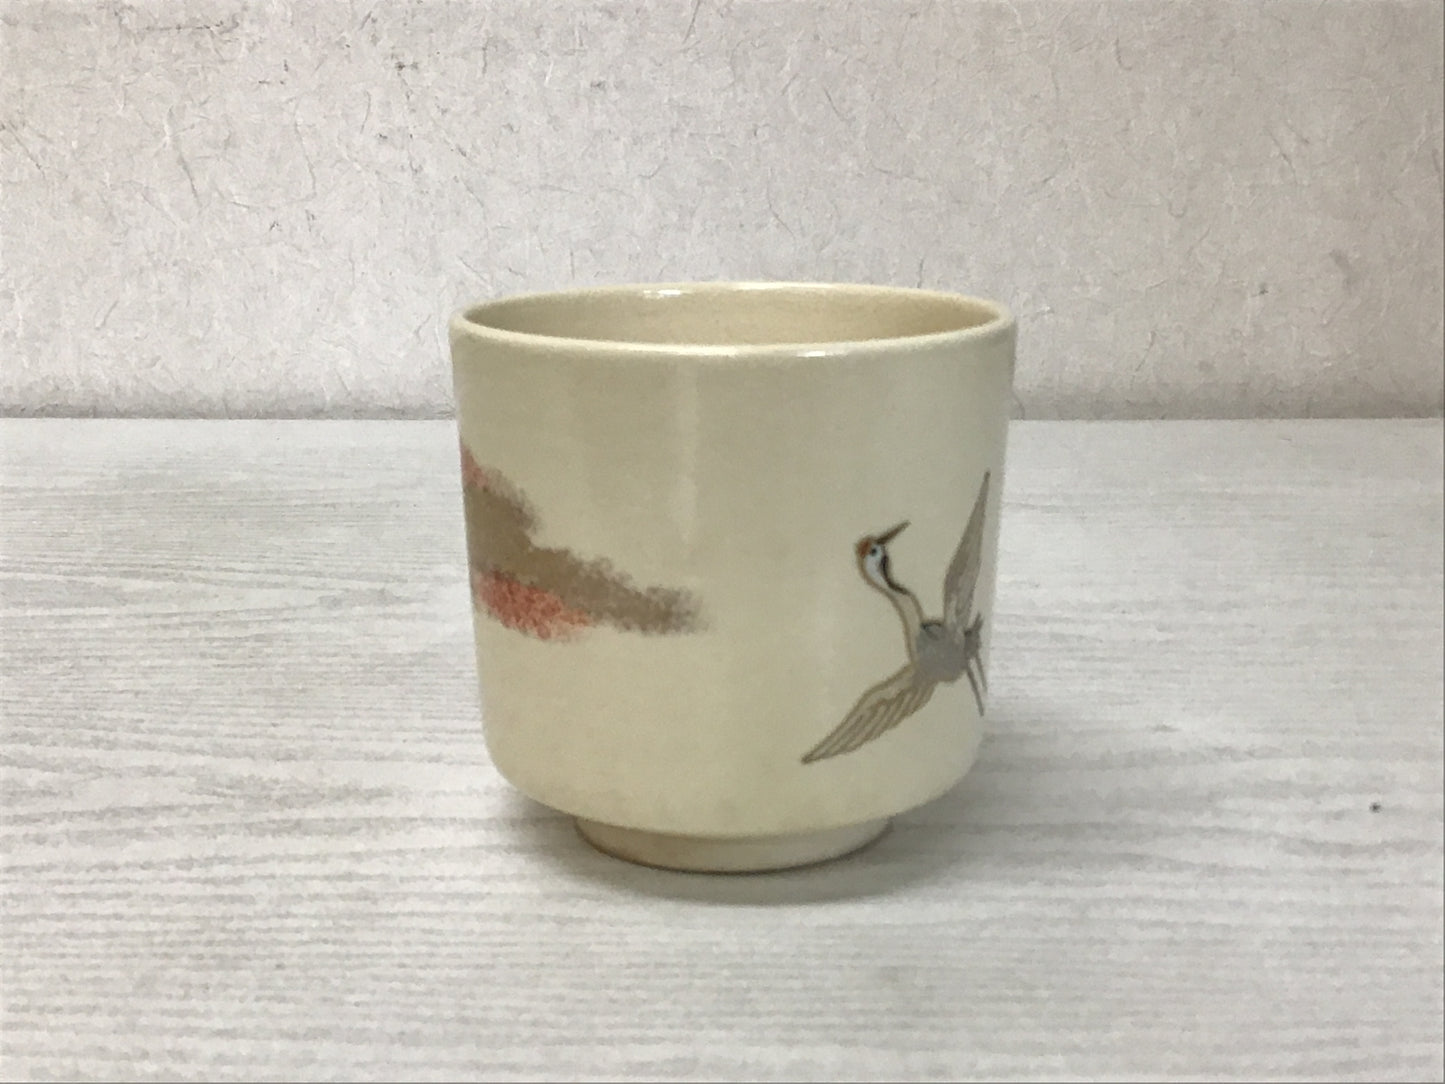 Y1467 CHAWAN Kyo-ware signed box Japanese bowl pottery Japan tea ceremony